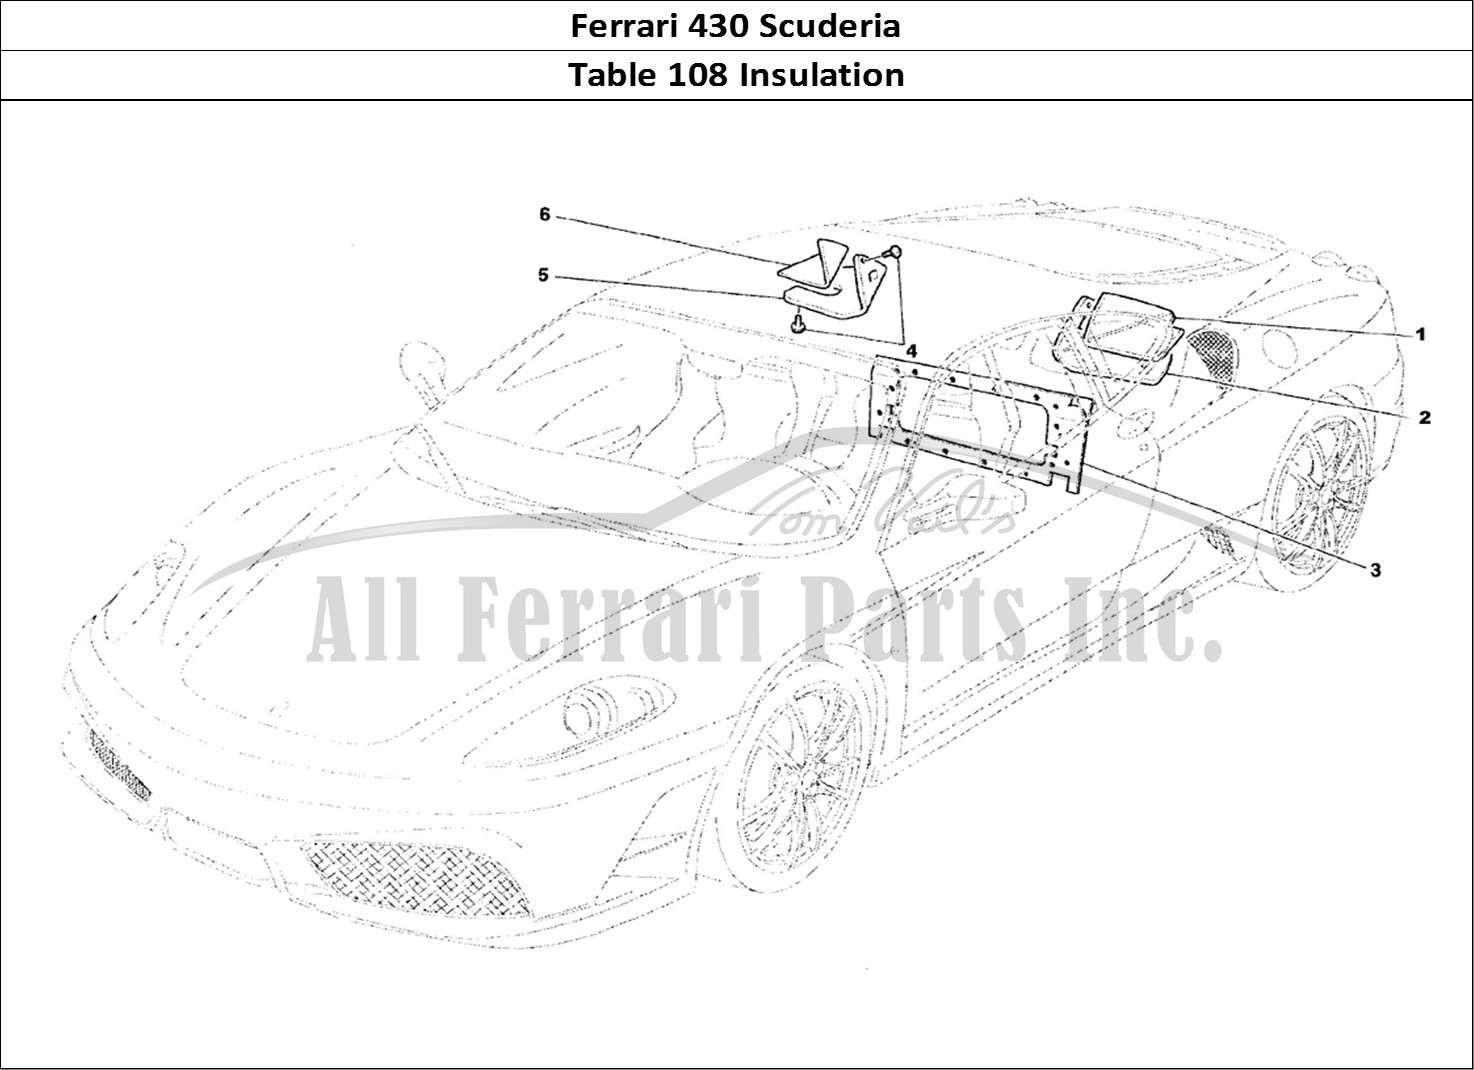 Ferrari Parts Ferrari 430 Scuderia Page 108 Insulations